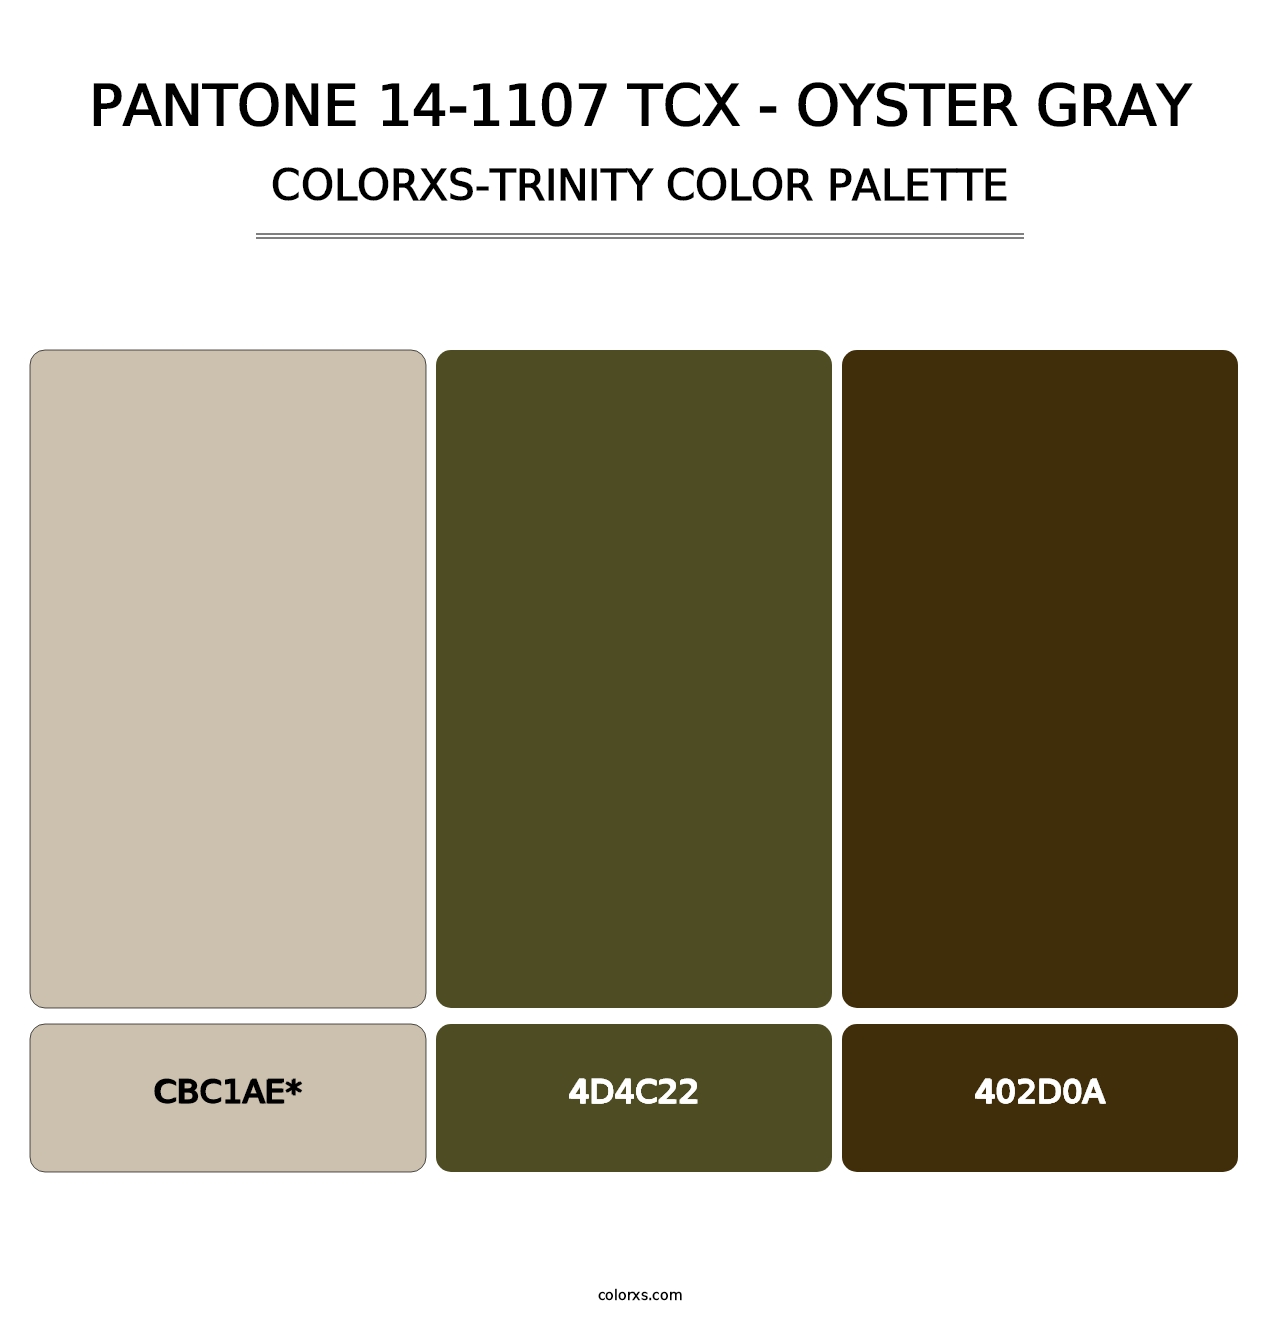 PANTONE 14-1107 TCX - Oyster Gray - Colorxs Trinity Palette